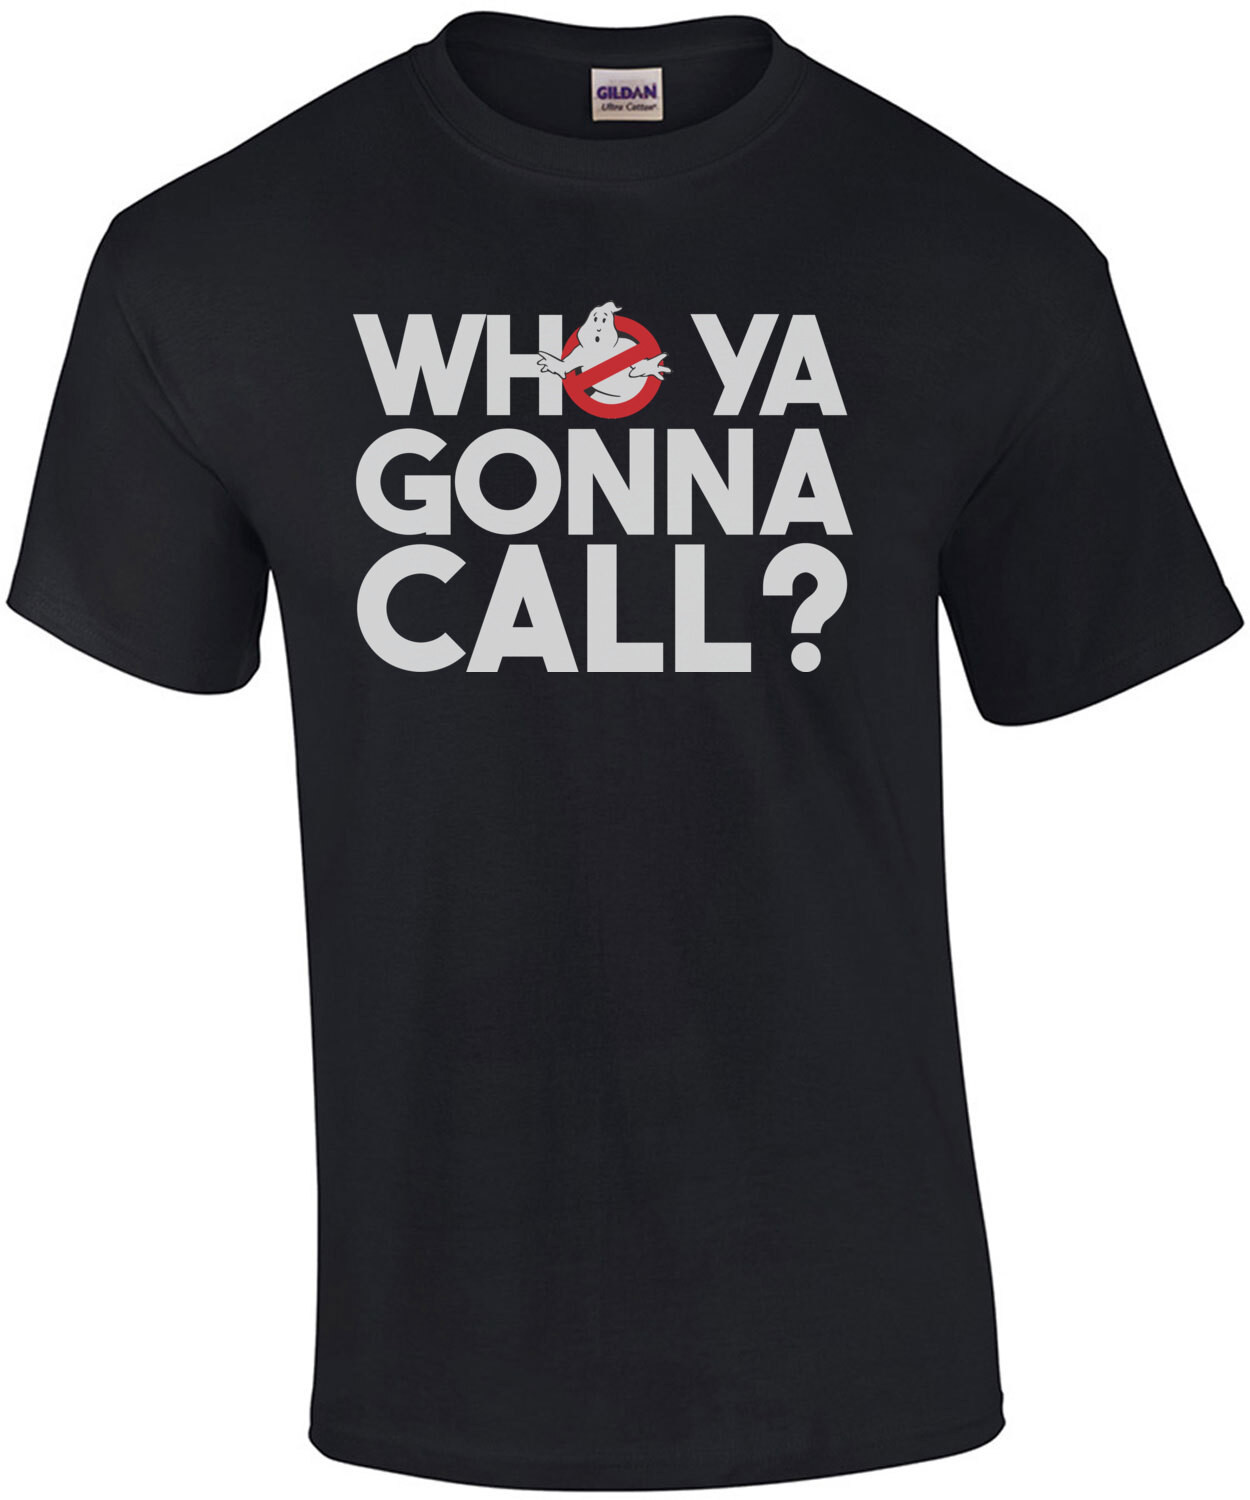 Who ya gonna call? - Ghostbusters T-Shirt - 80's T-Shirt